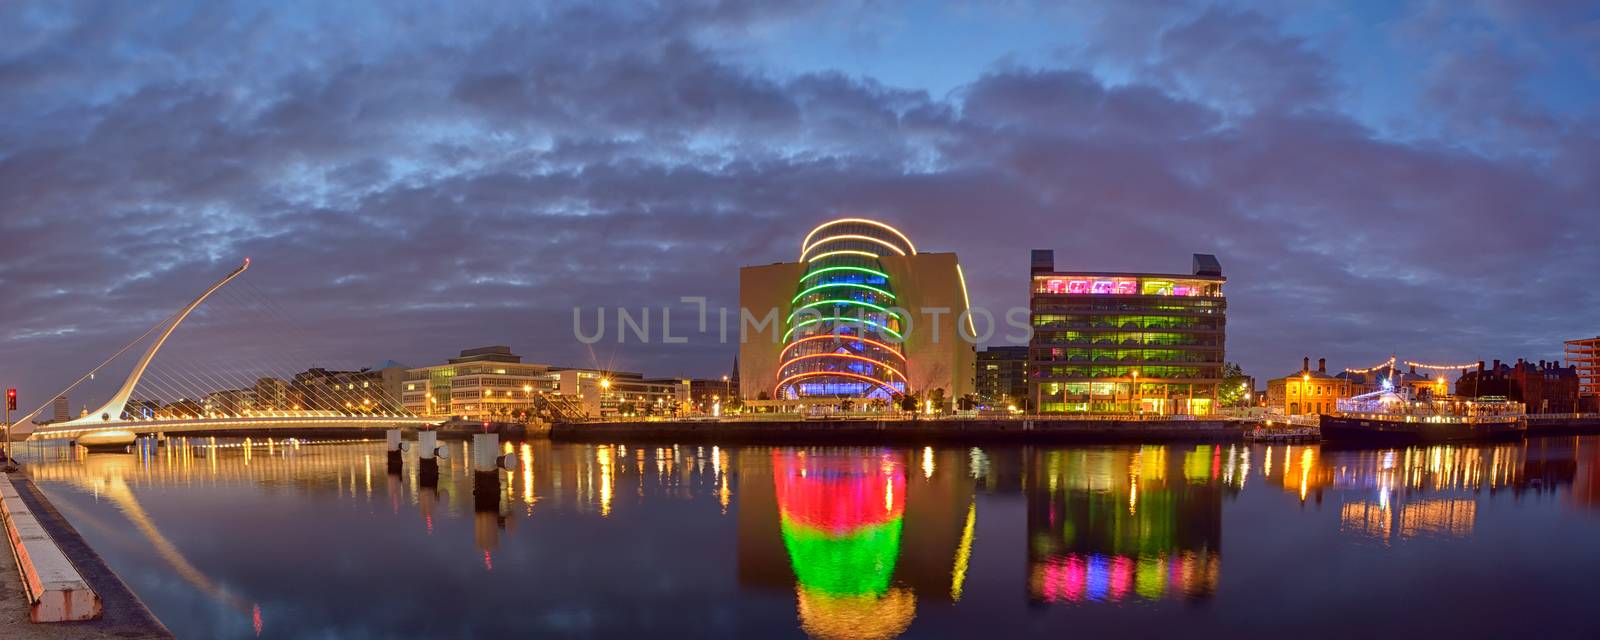 Samuel Beckett Bridge and the river Liffey in Dublin  by mady70